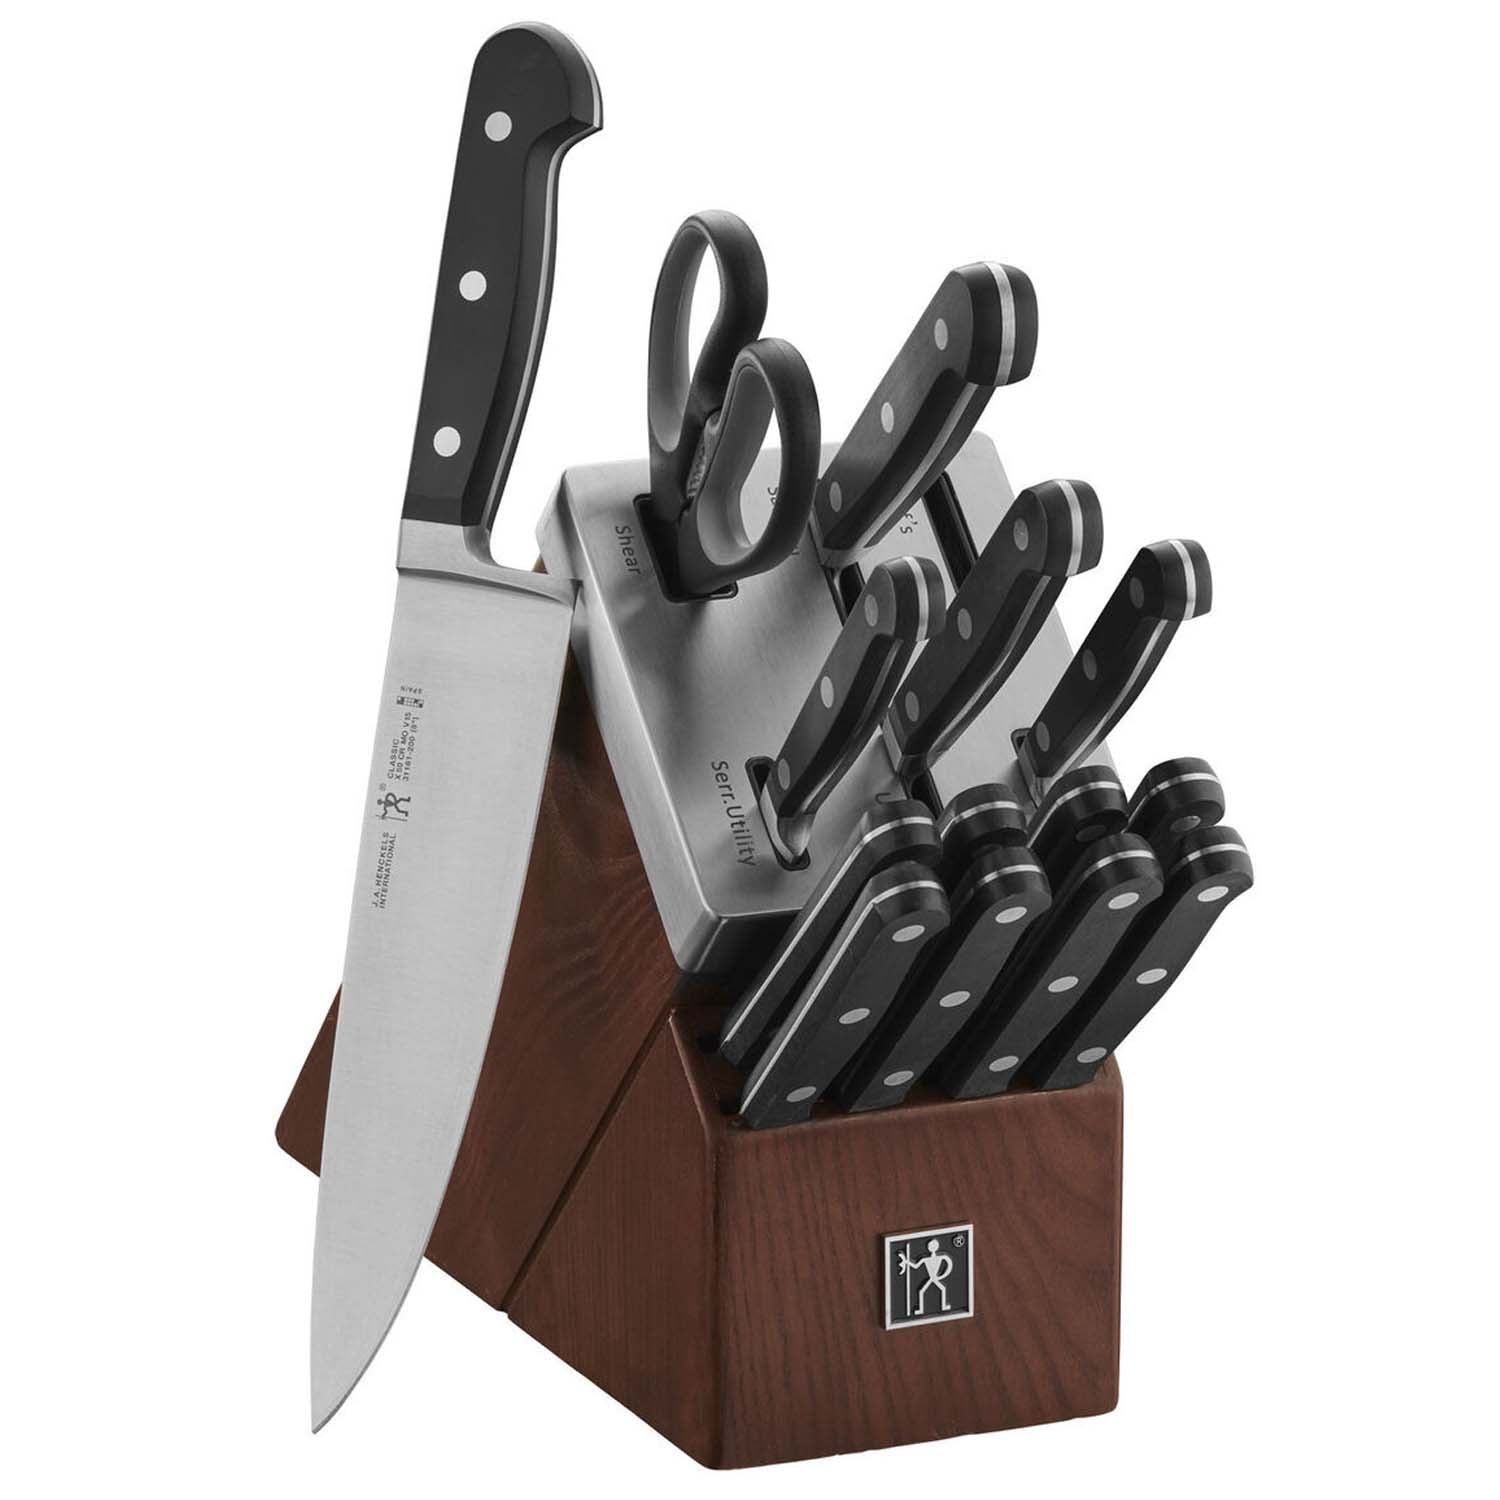 Farberware 15-Piece Stamped Stainless Steel Knife Block Set